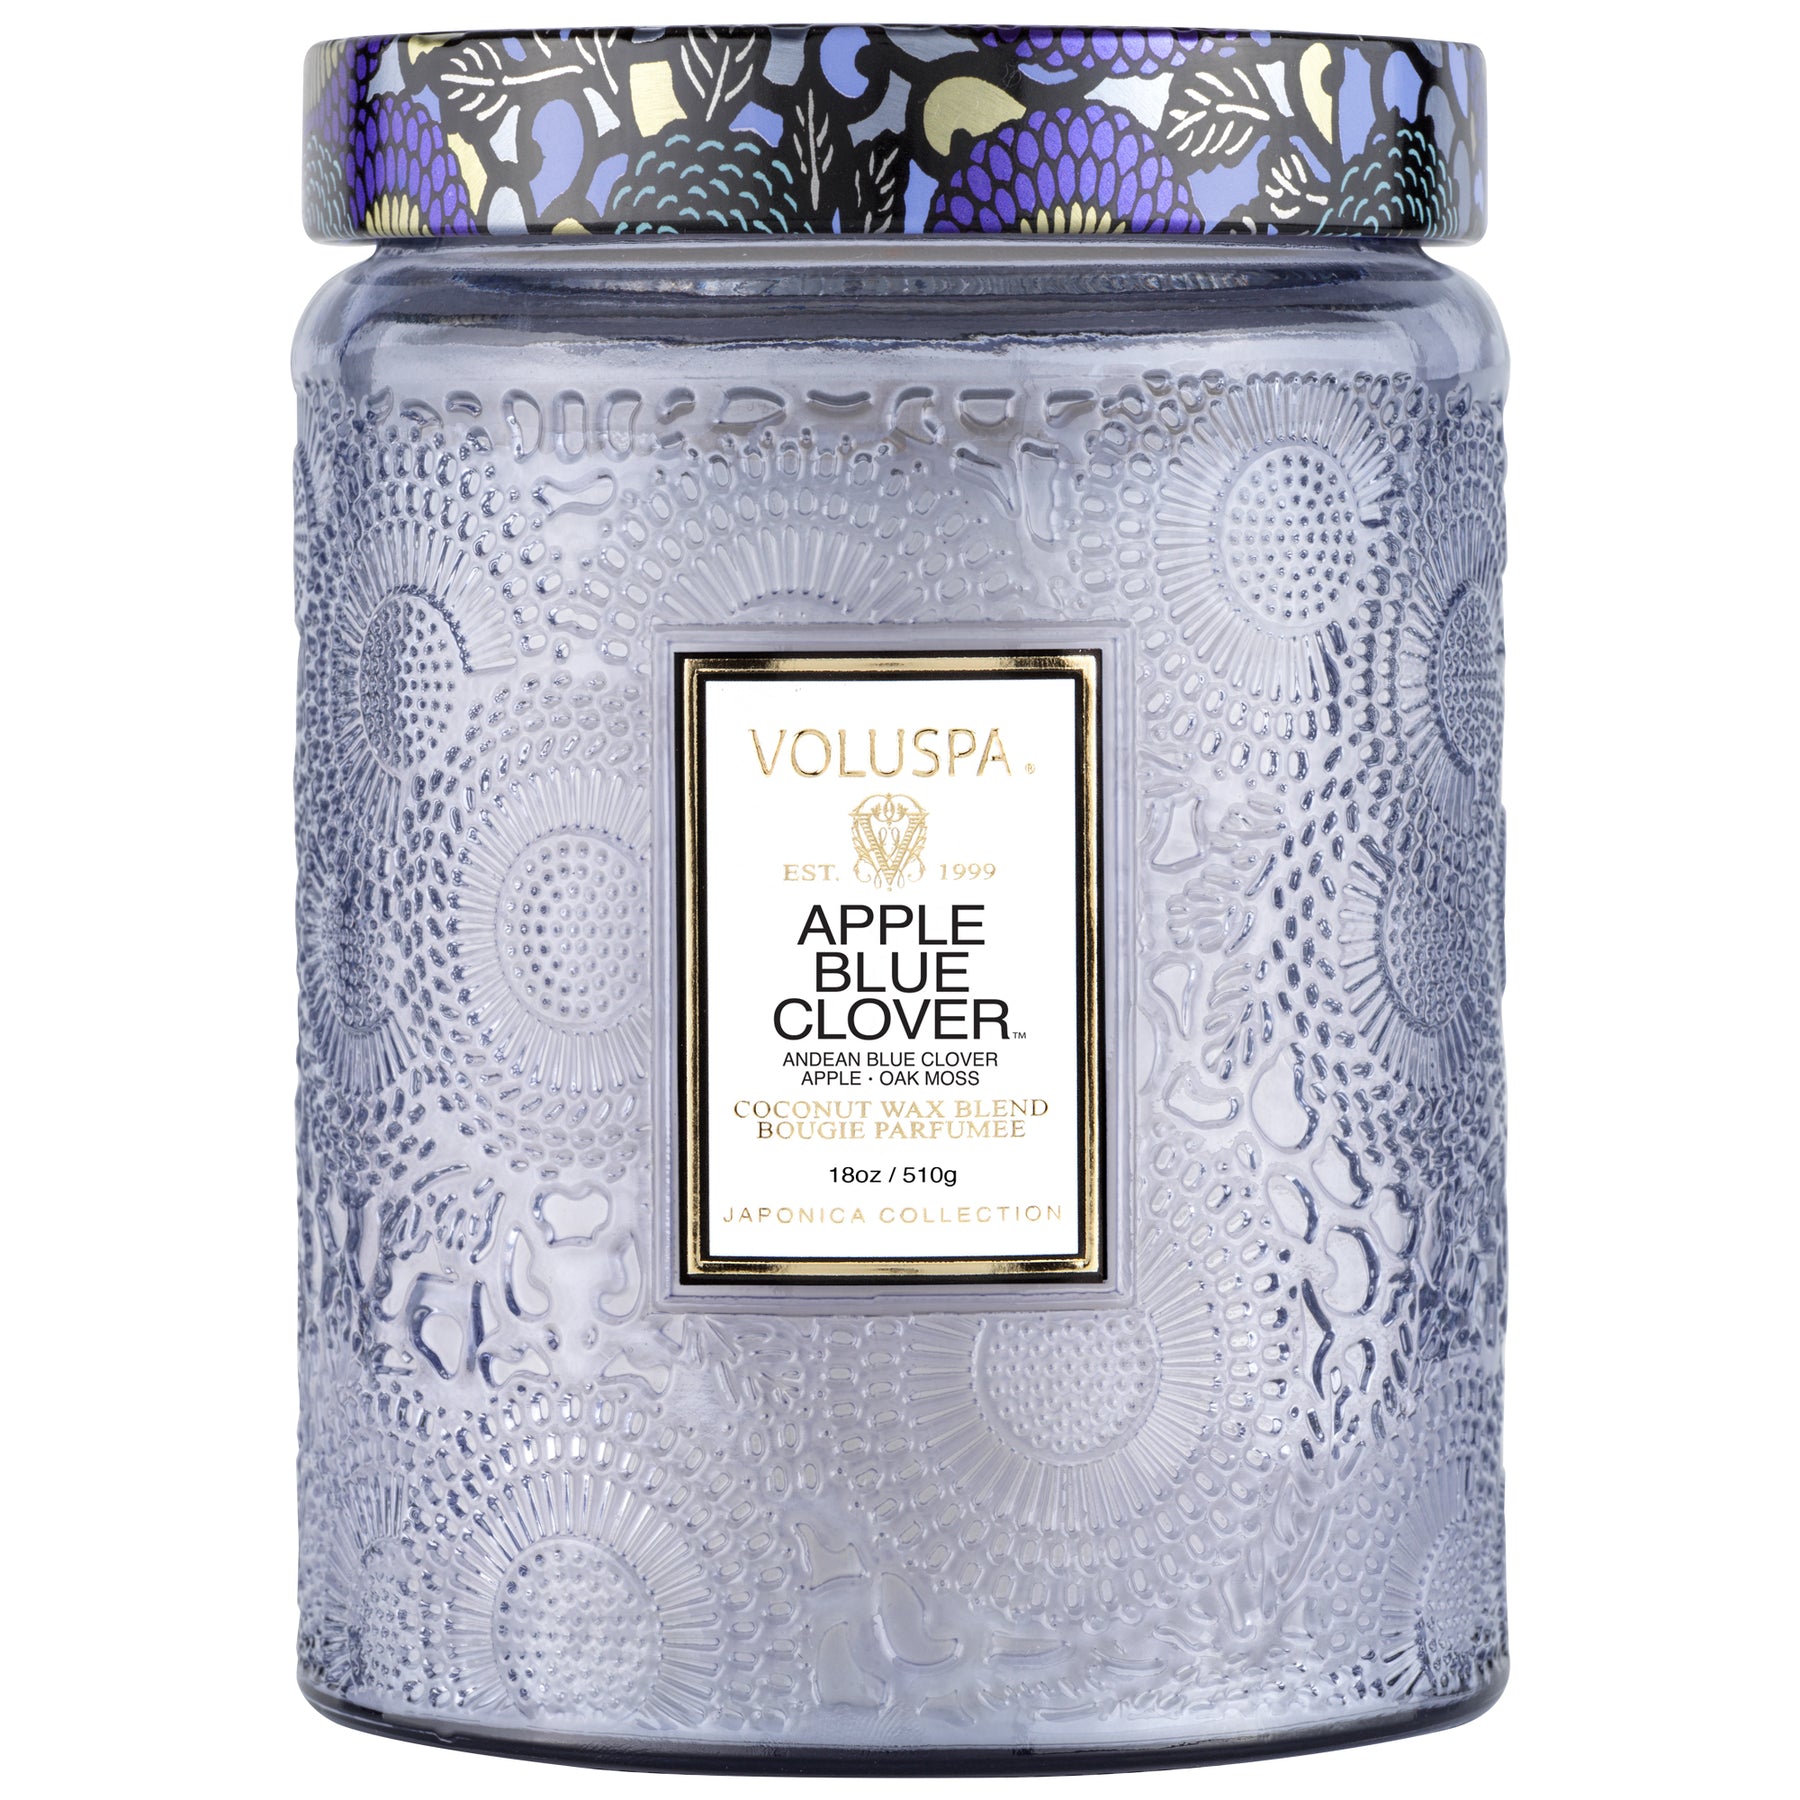 Apple Blue Clover - Large Jar Candle